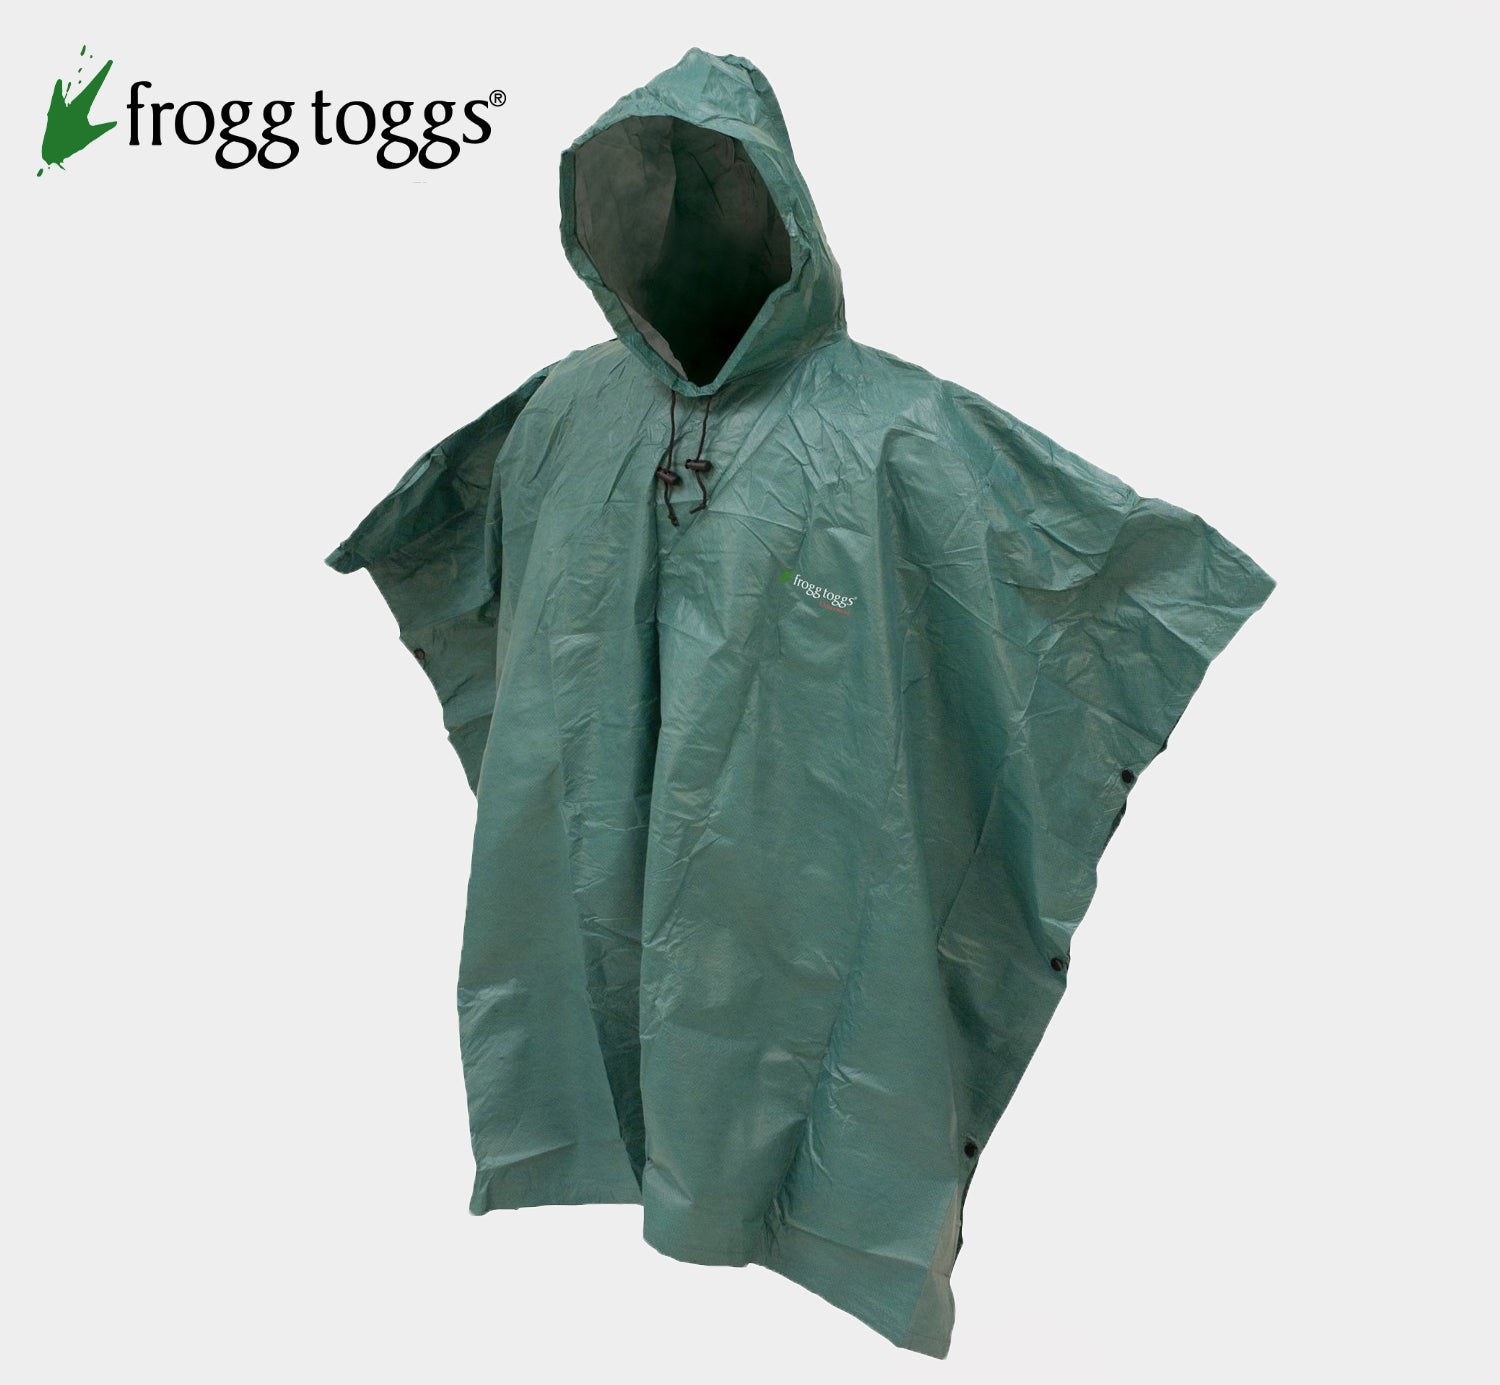 Frogg toggs / Ultra-Lite II Poncho